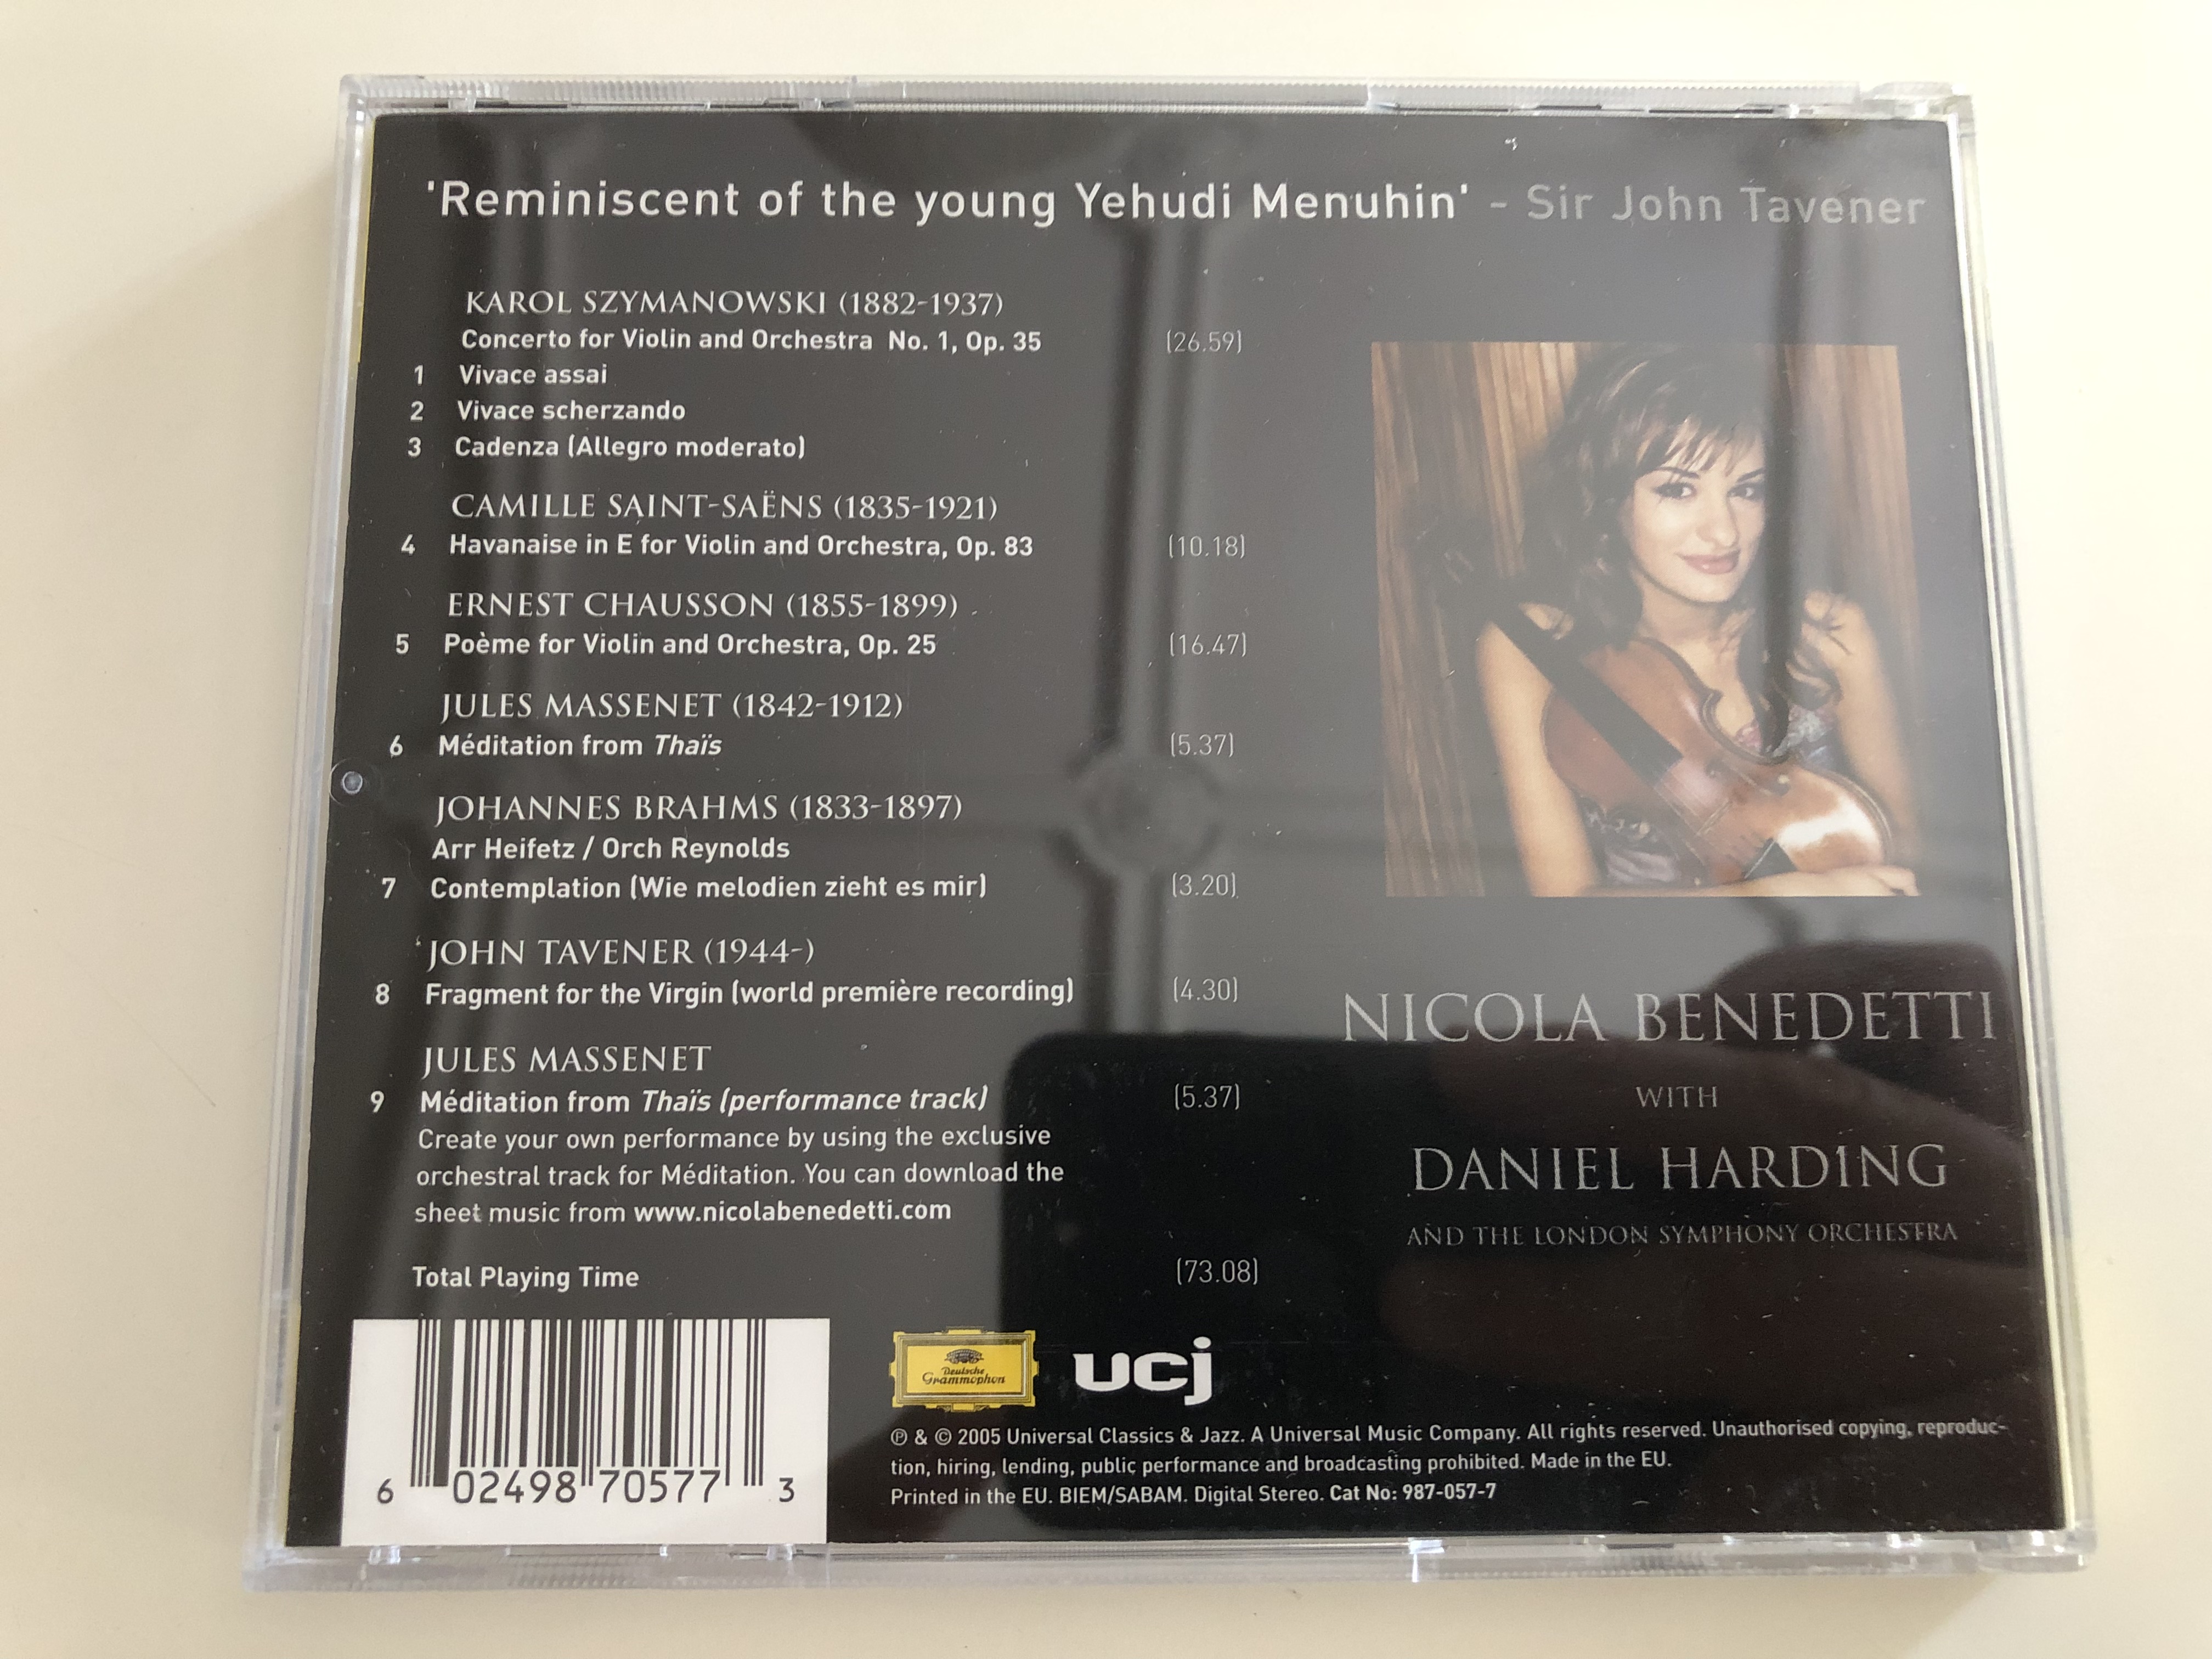 nicola-benedetti-szymanowski-chausson-saint-saens-london-symphony-orchestra-conducted-by-daniel-harding-audio-cd-2005-987-057-7-6-.jpg